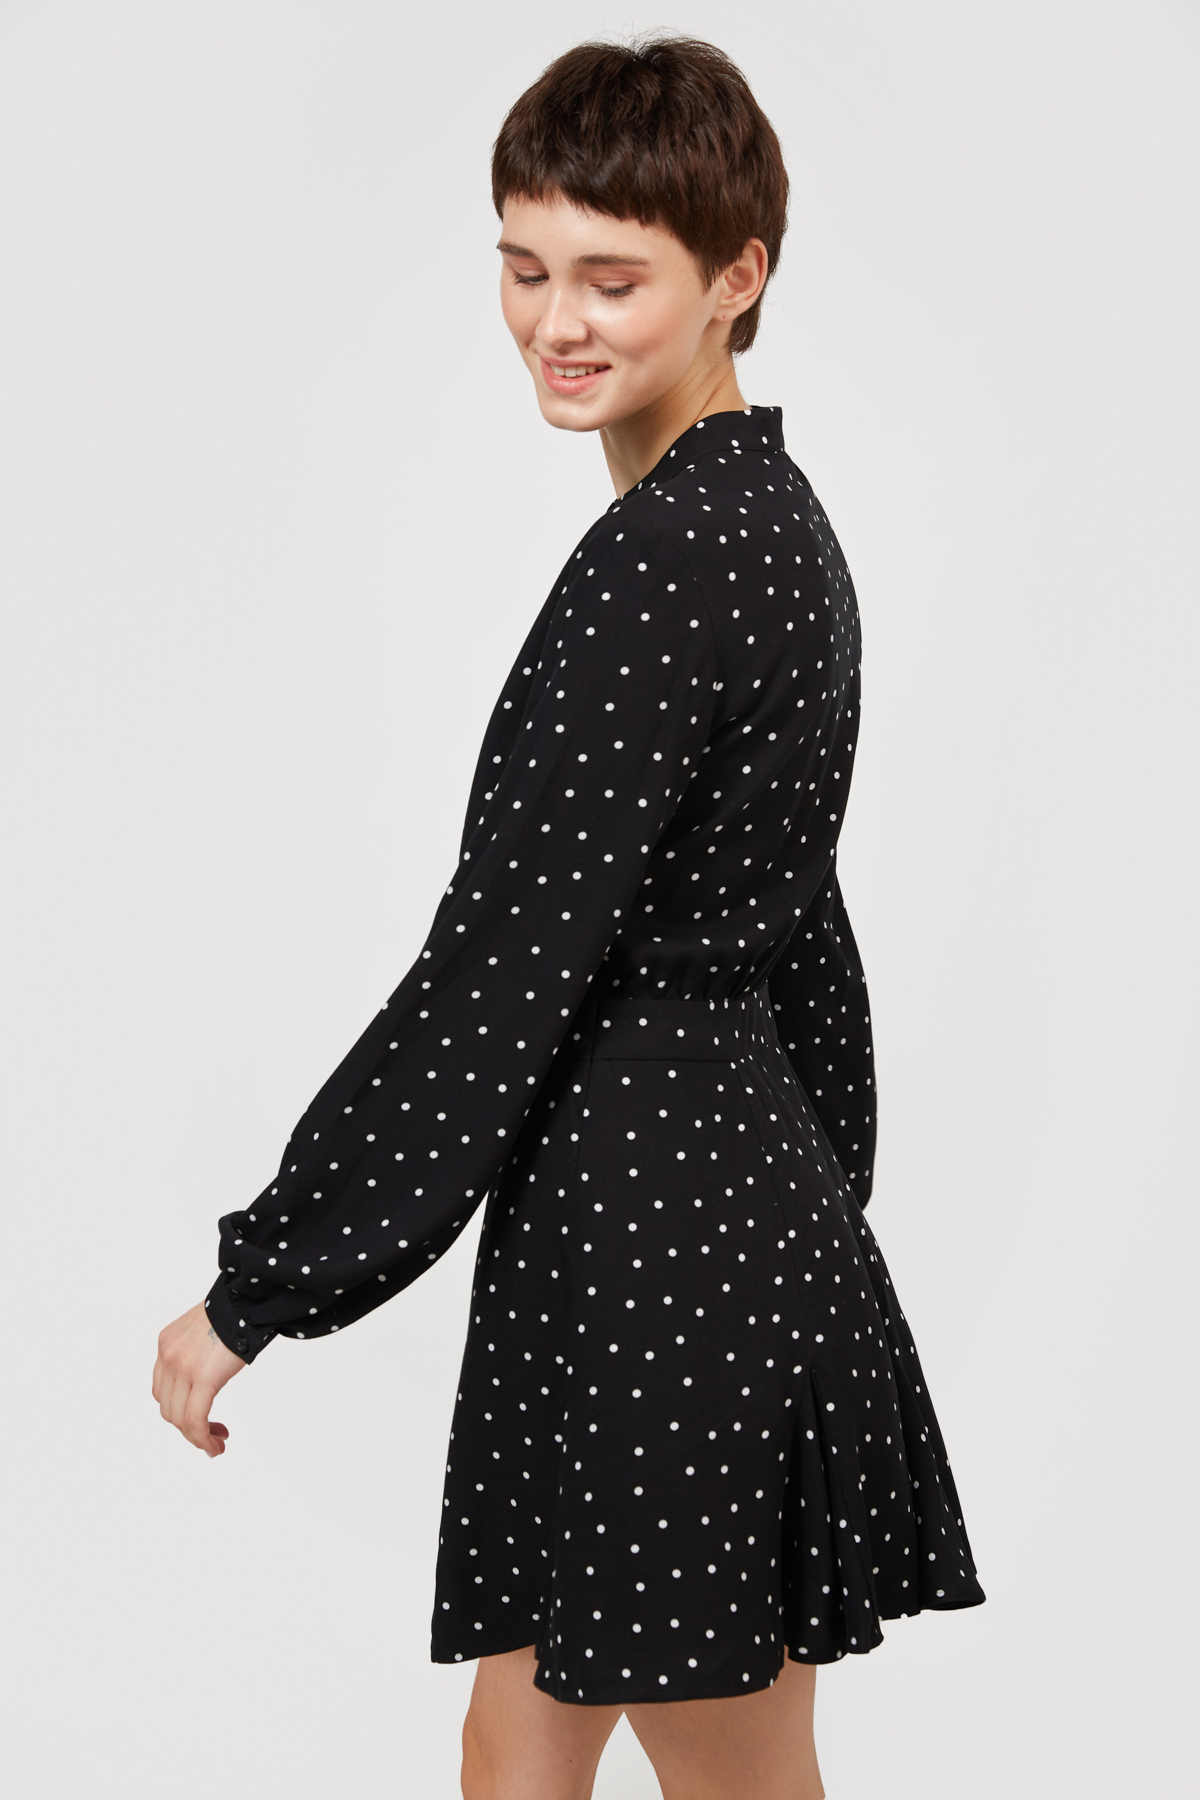 Viscose short dress black in white polka dots print, photo 2